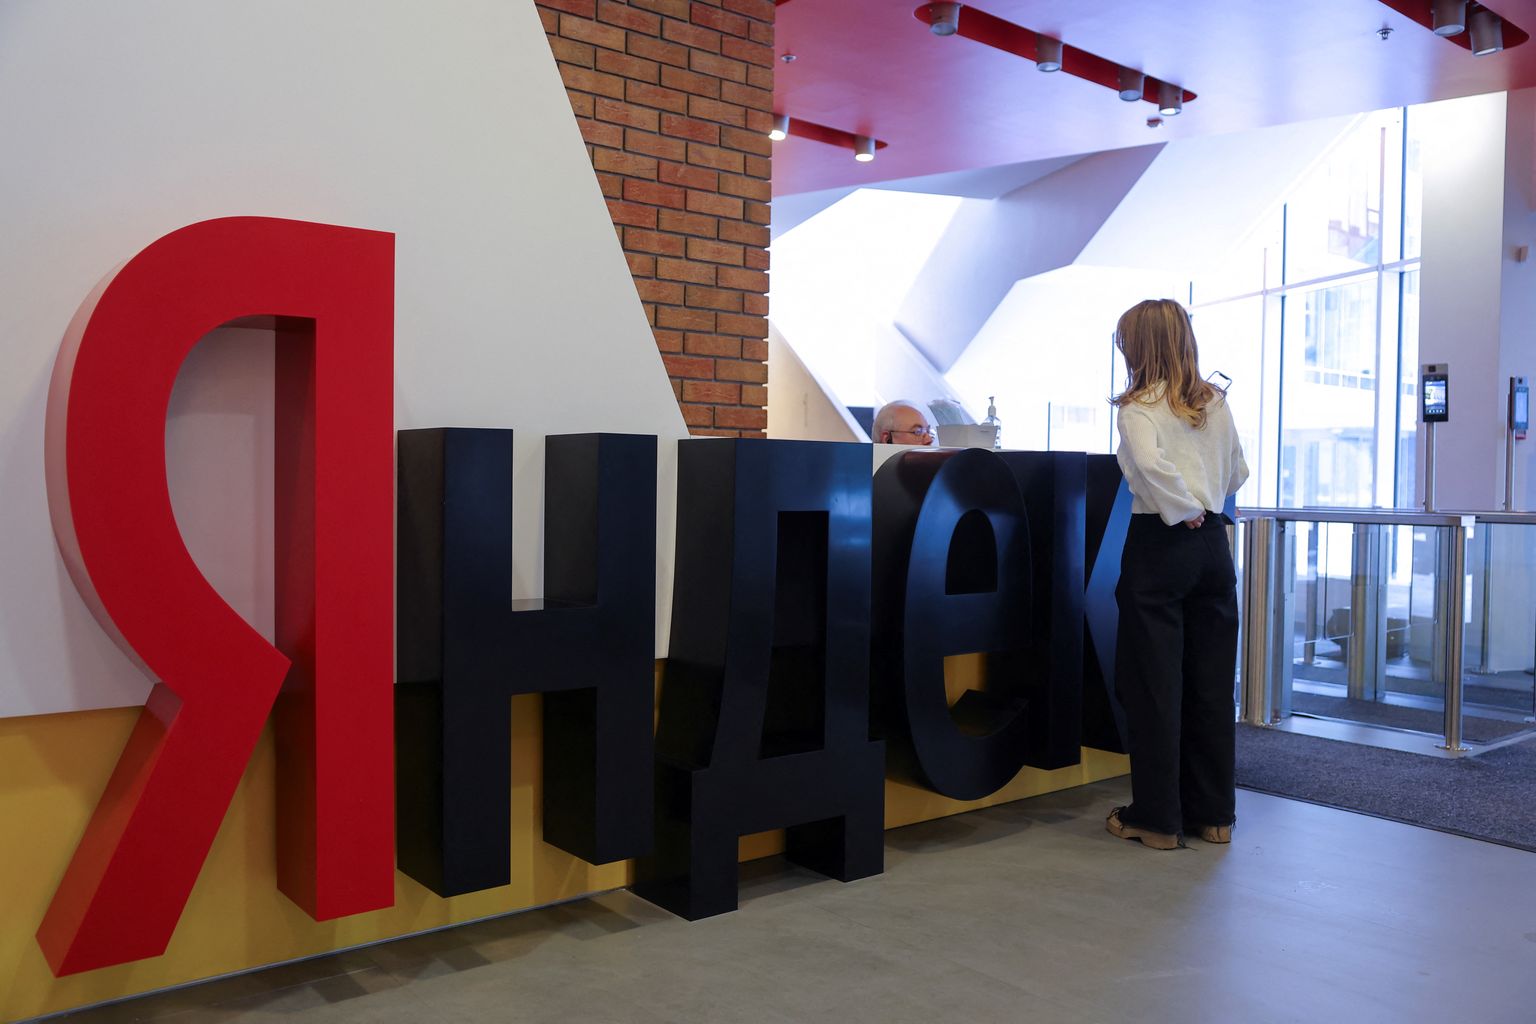 Naine vestlemas administraatoriga Yandexi valvelauas Moskvas.